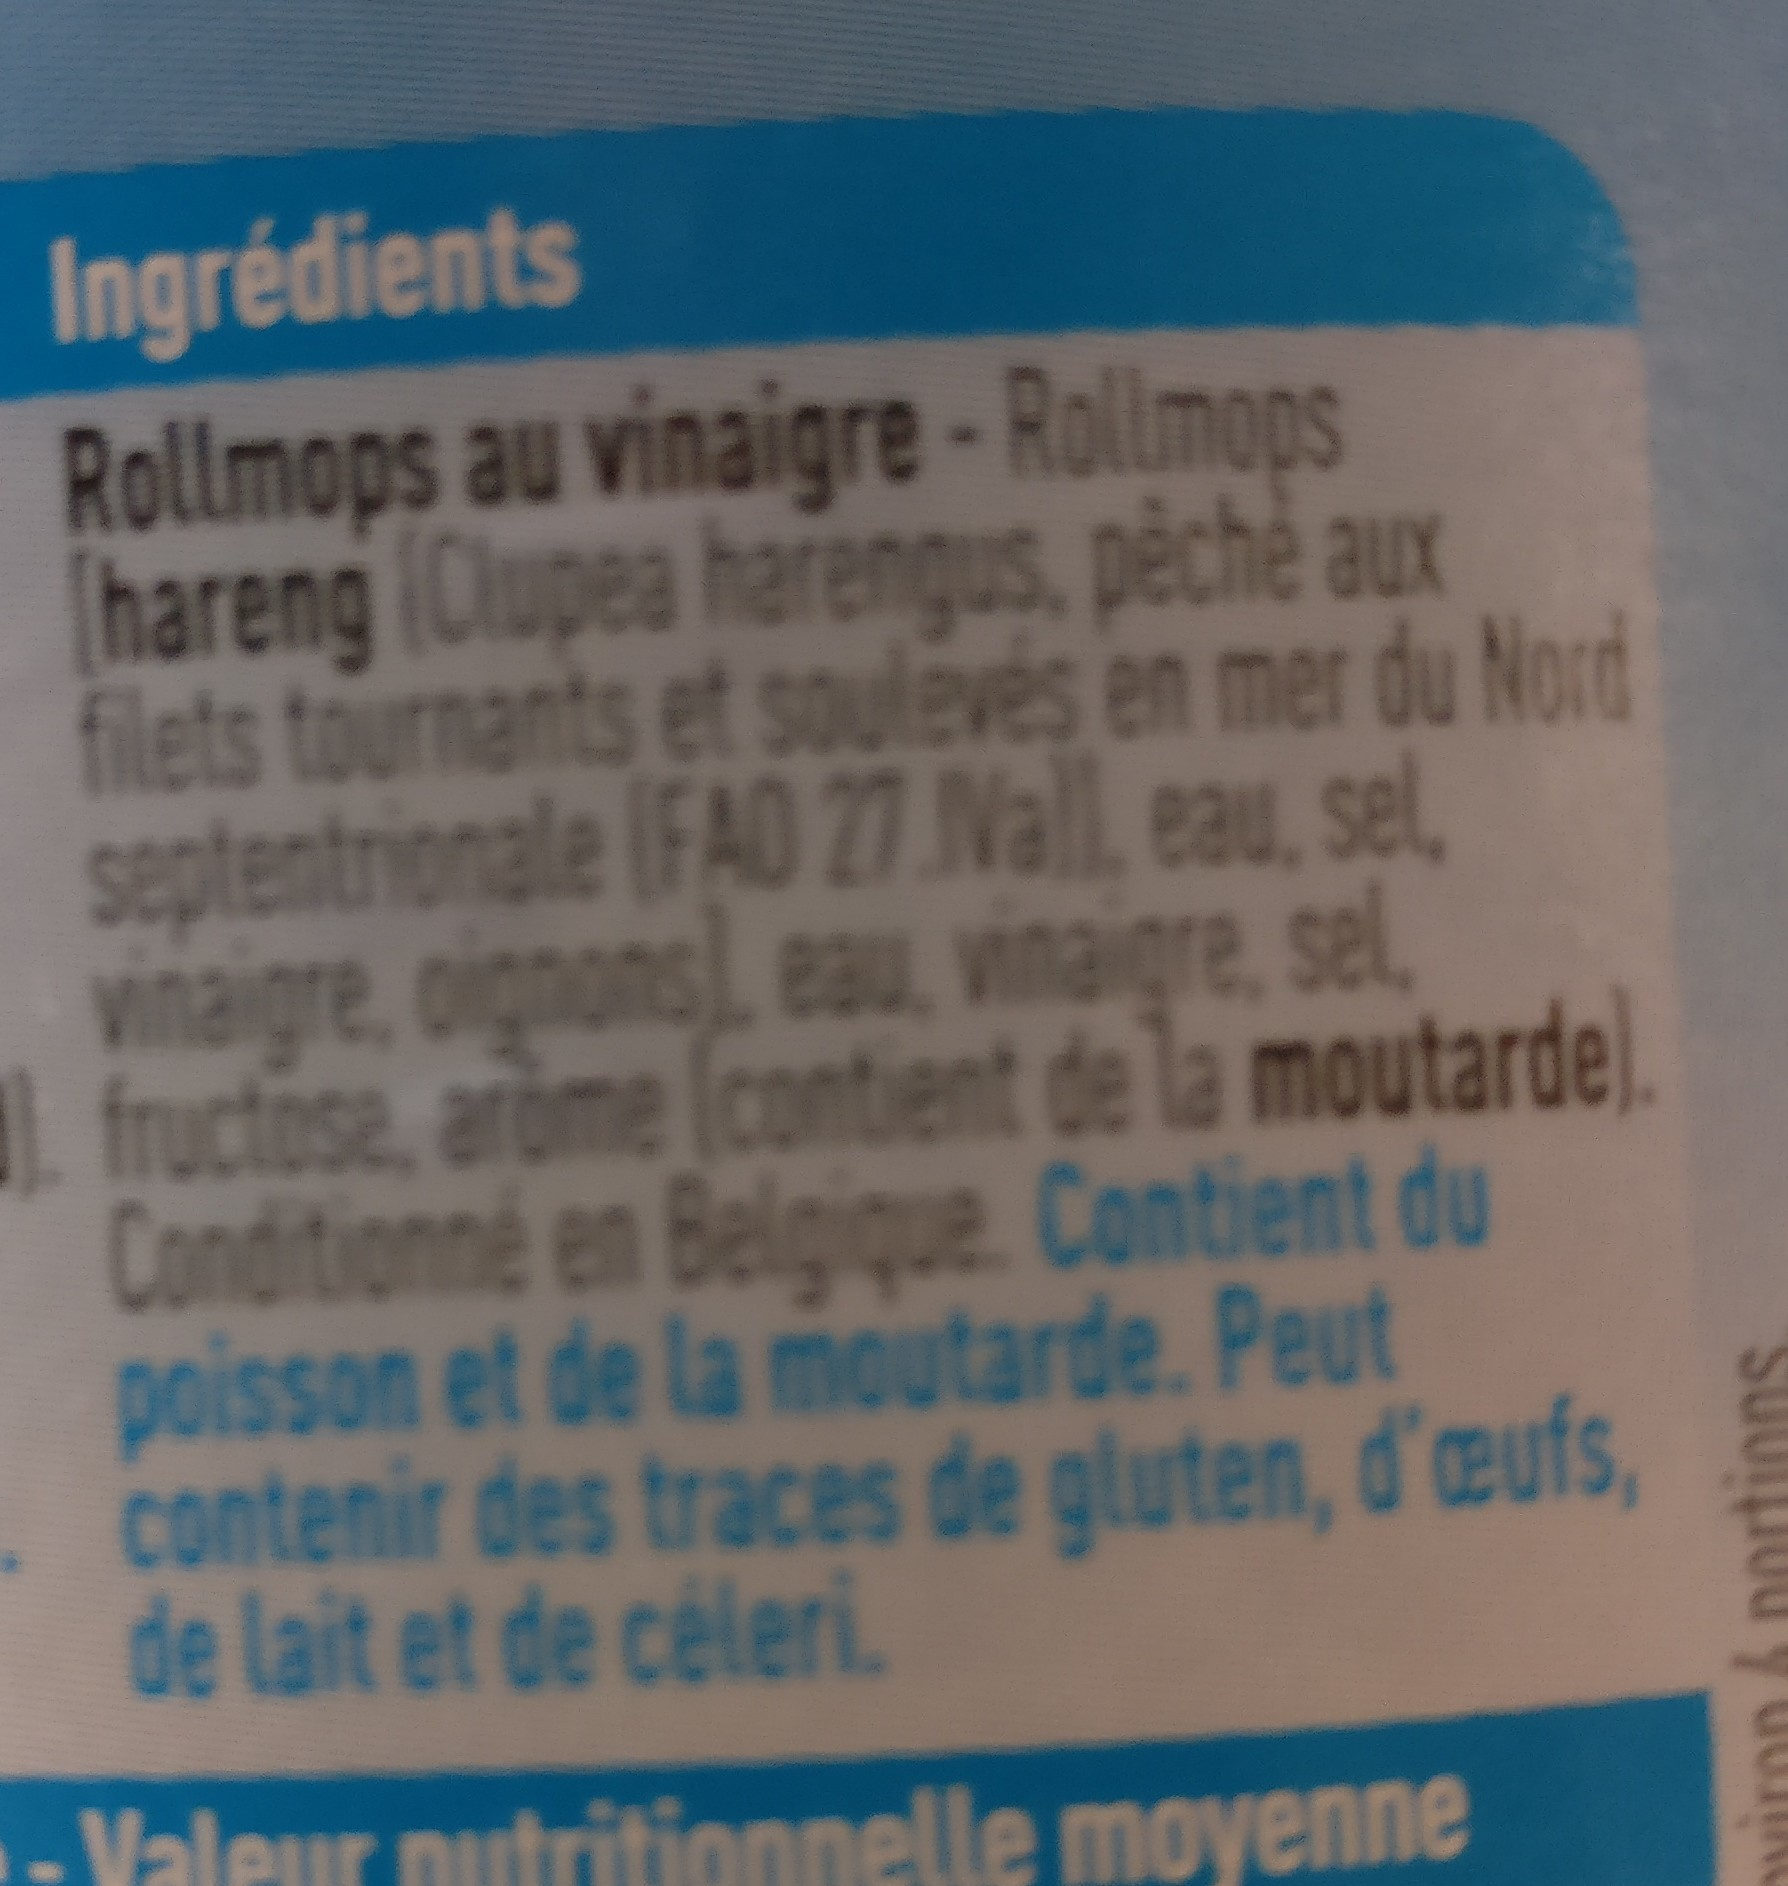 Rolmops au vinaigre - Ingrediënten - fr